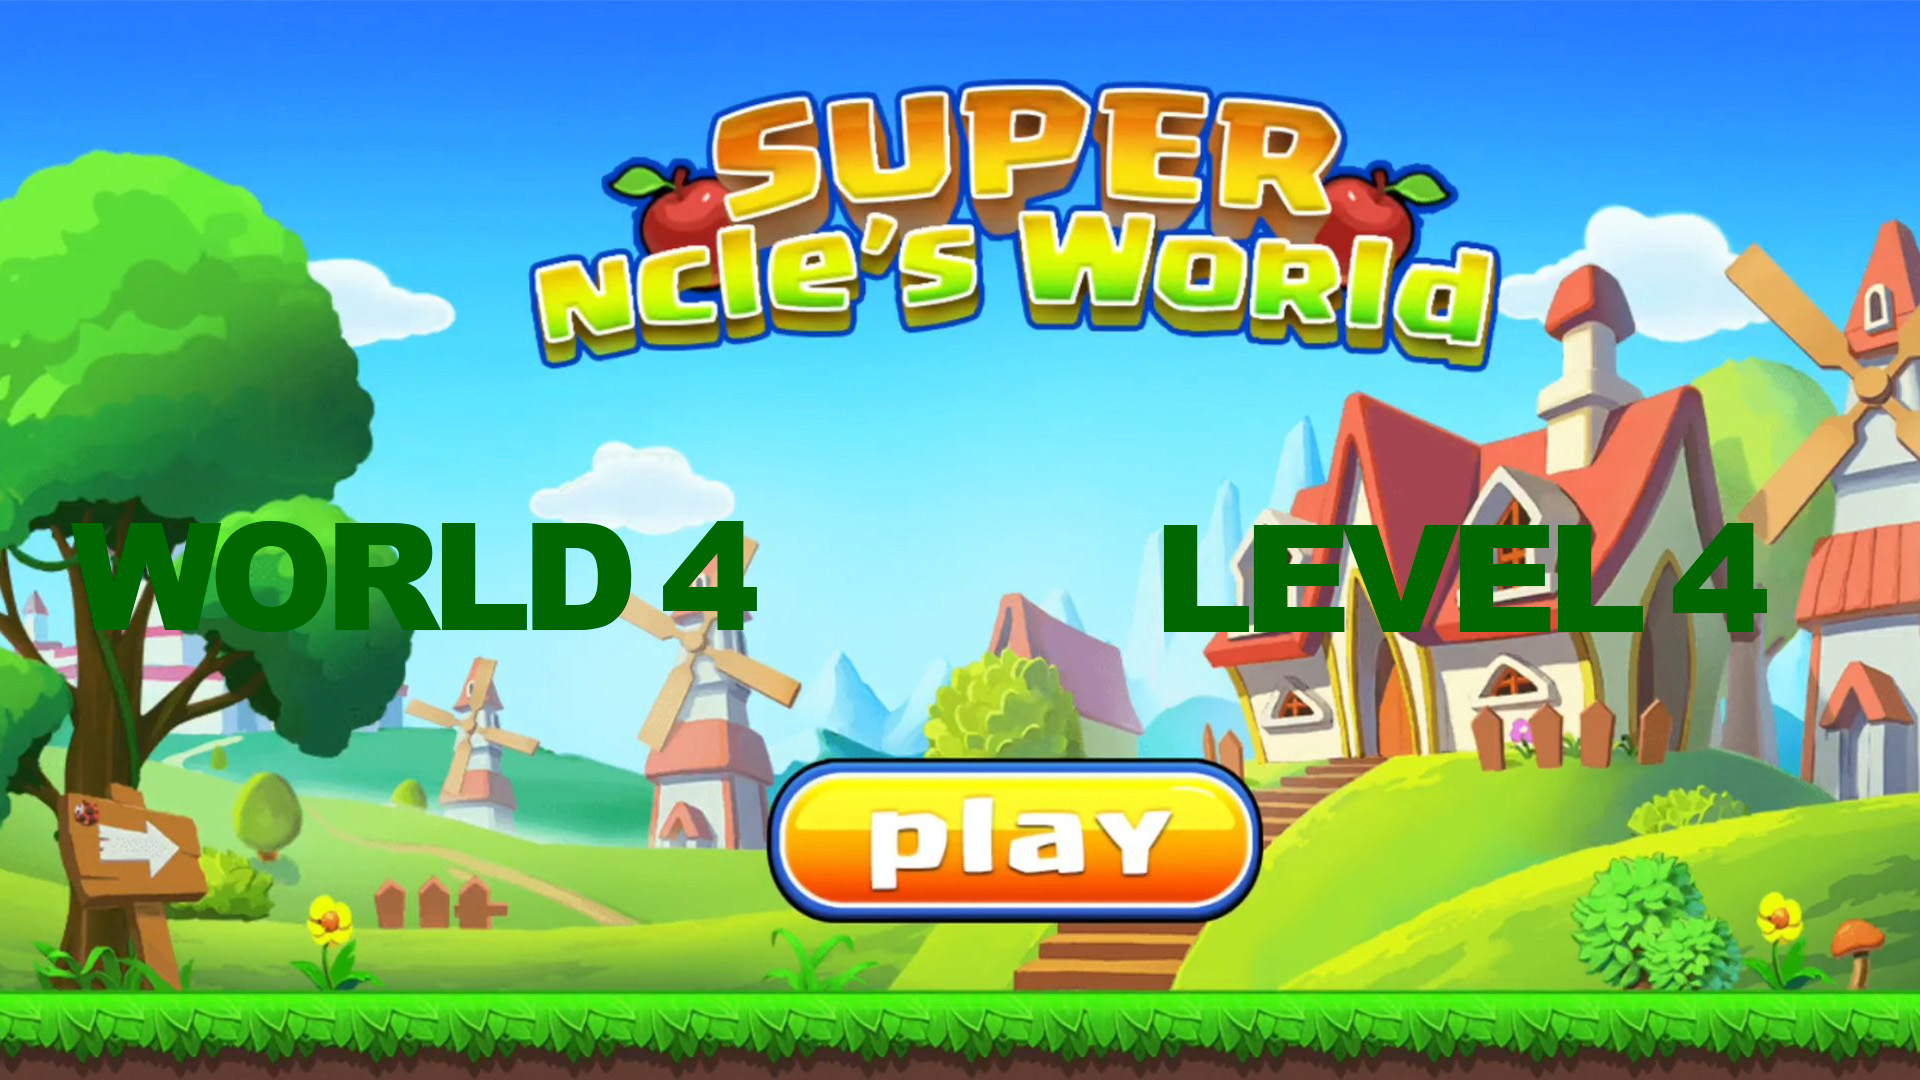 Super ncle's  World 4. Level 4.